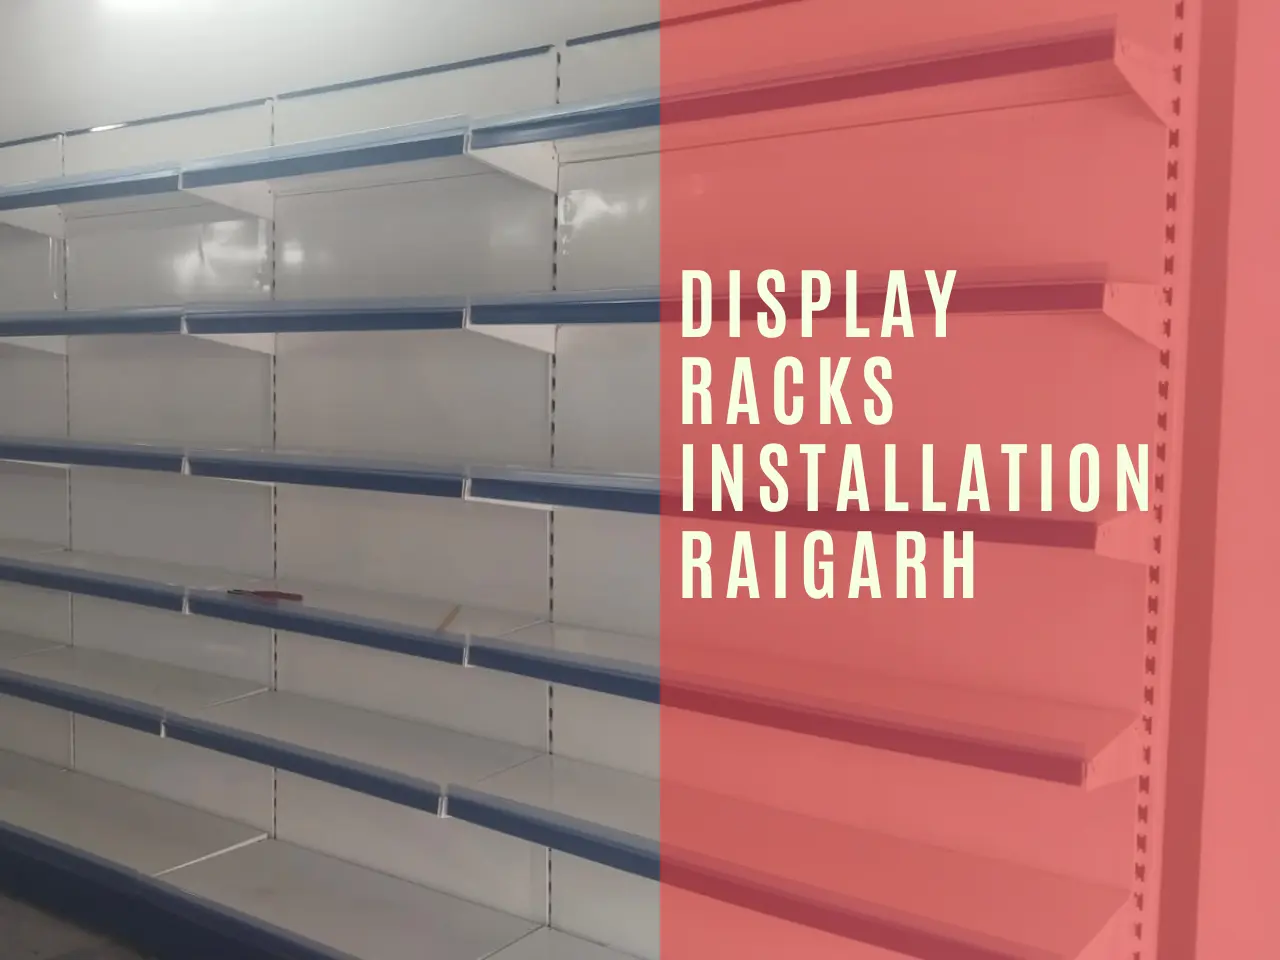 Display Racks Installation Completed in Raigarh.webp